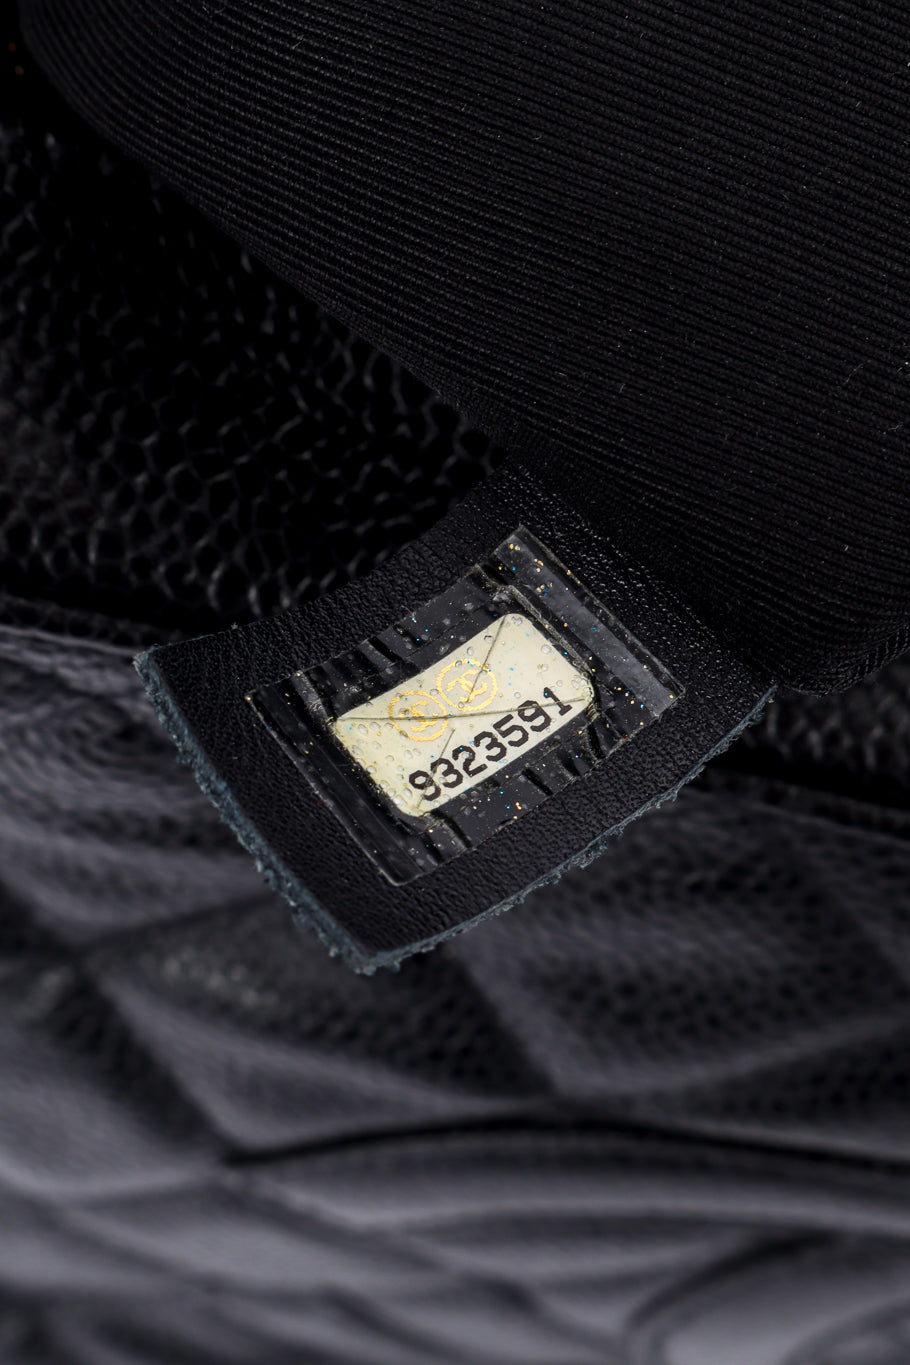 Chanel Quilted CC Shoulder Bag serial number @recess la